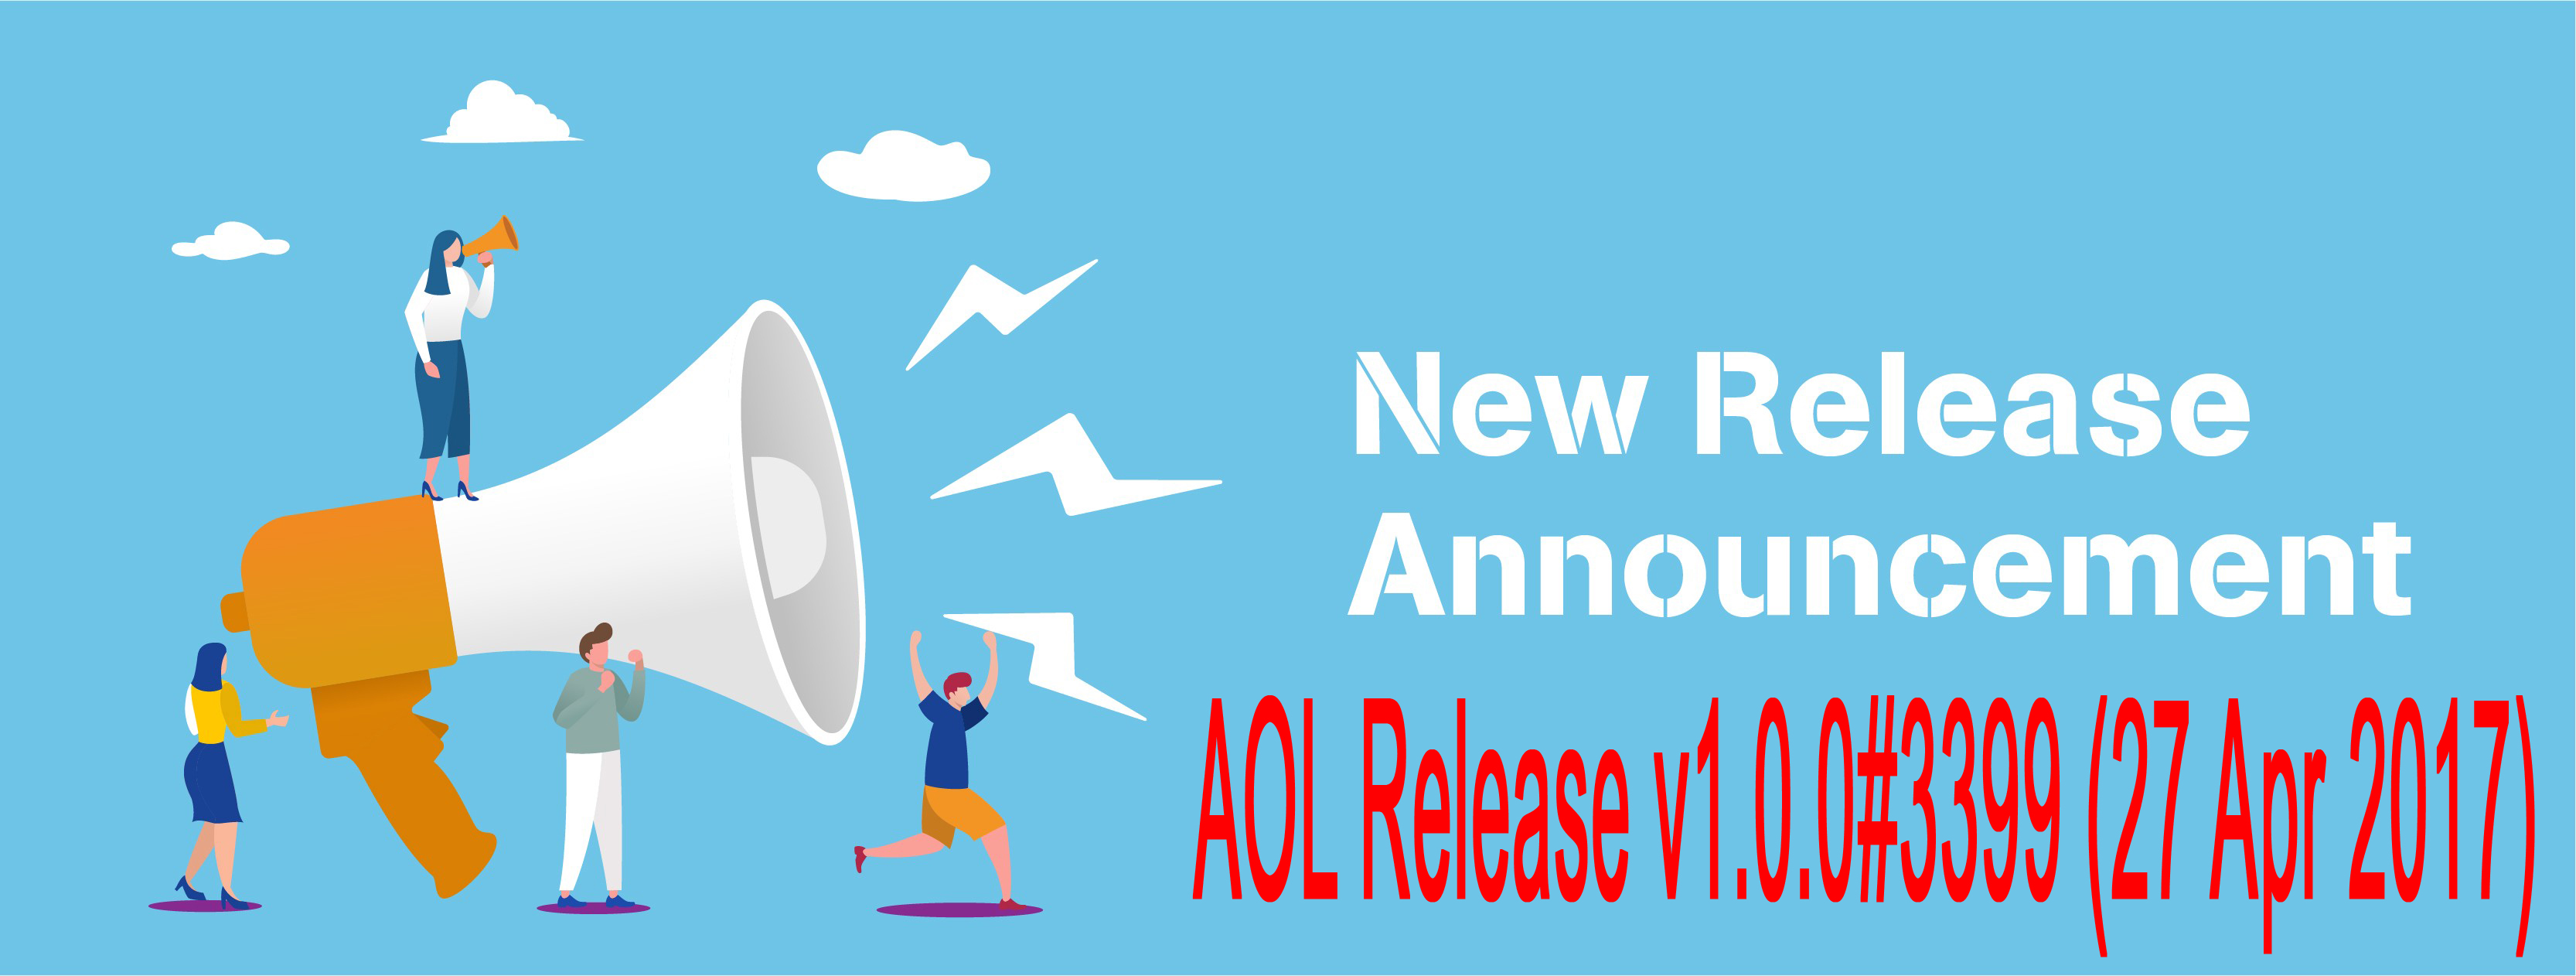 Release v1.0.0#3399 (27 Apr 2017)